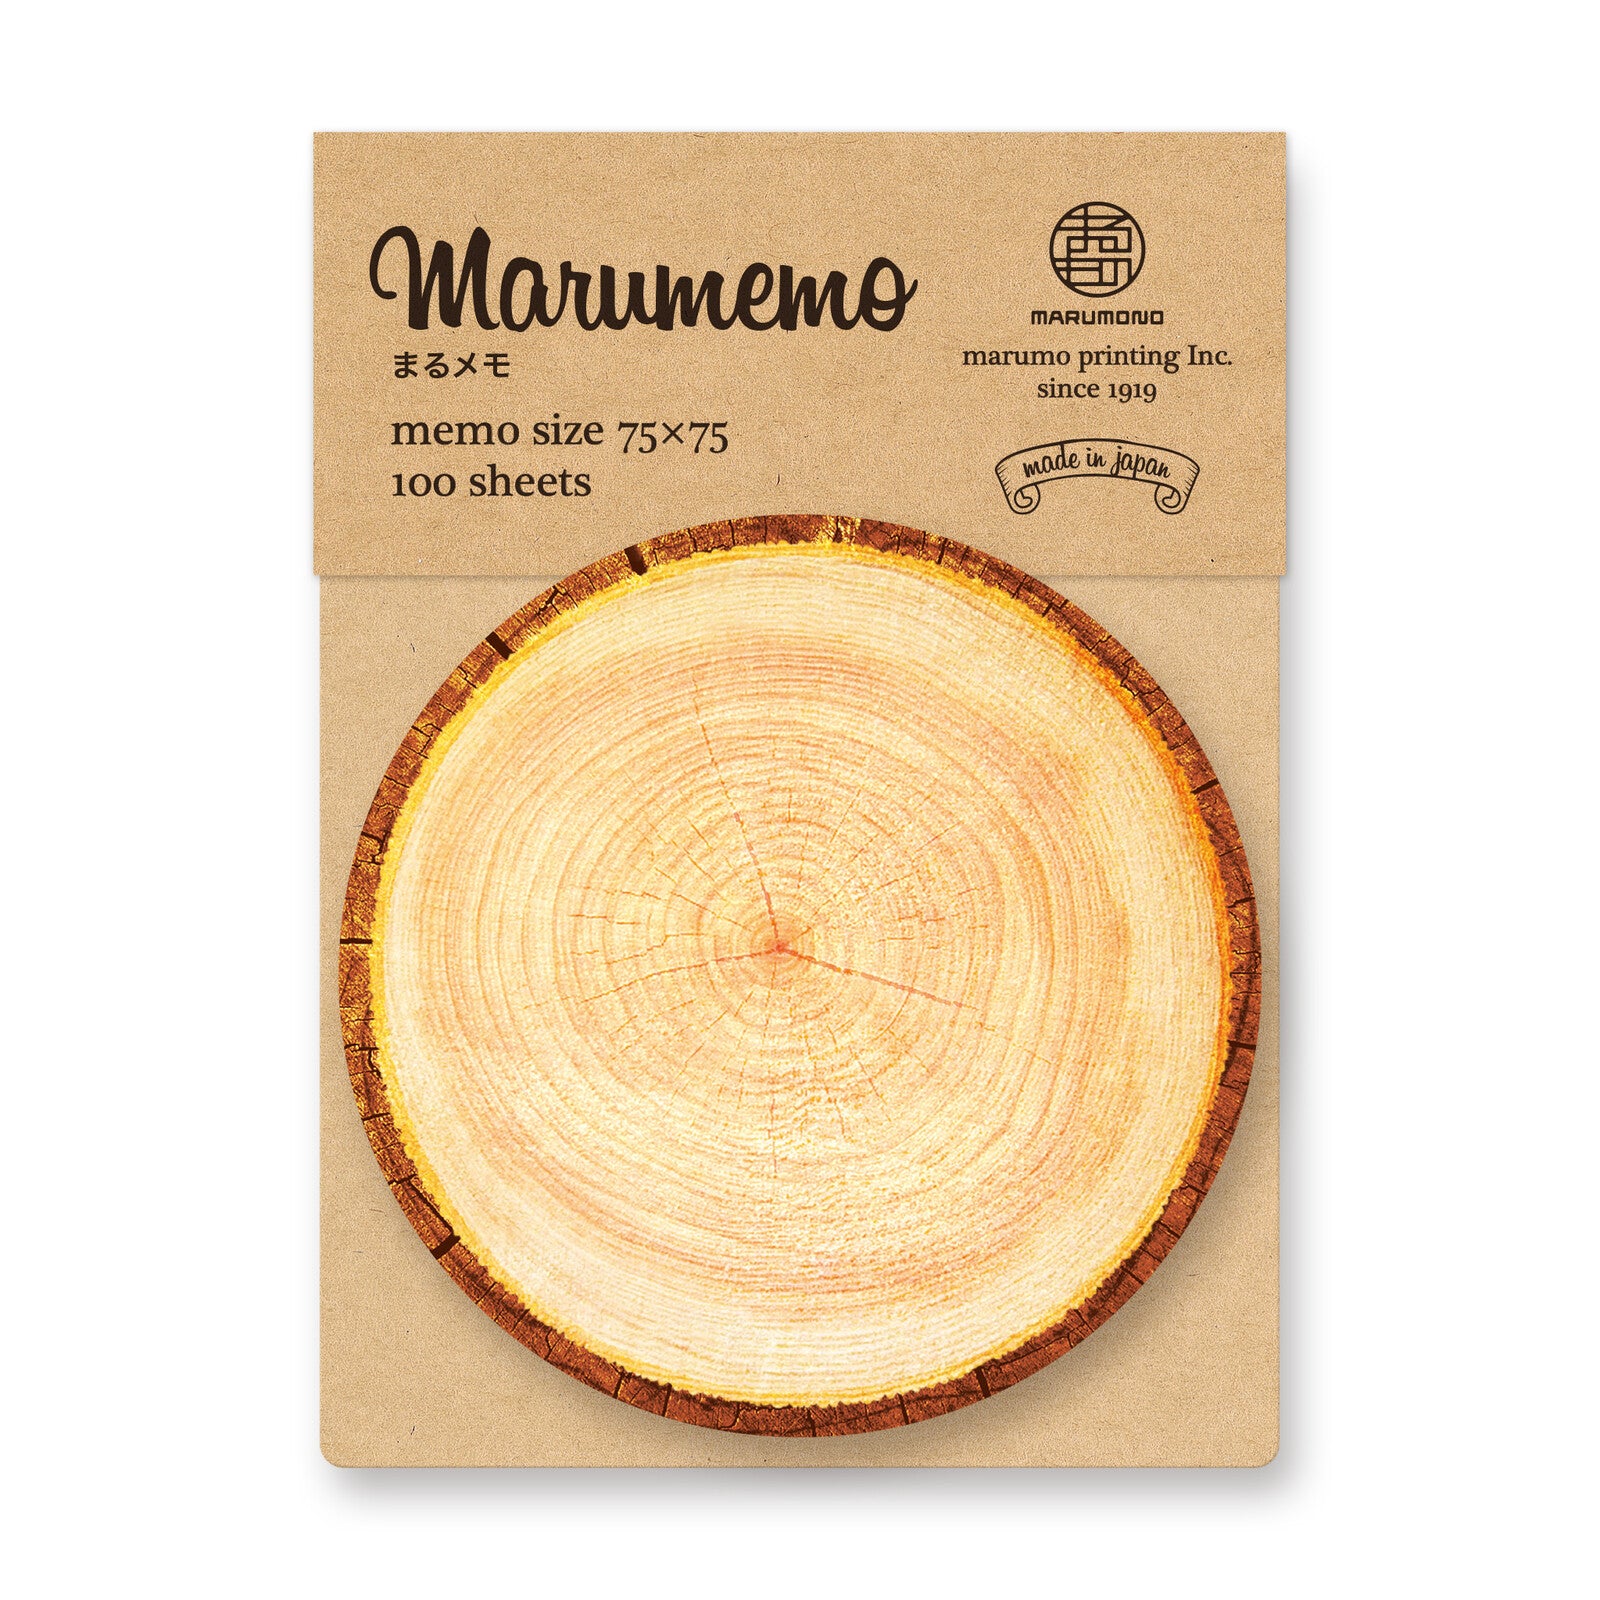 Wood Marumemo Message Pads - Odd Nodd Art Supply